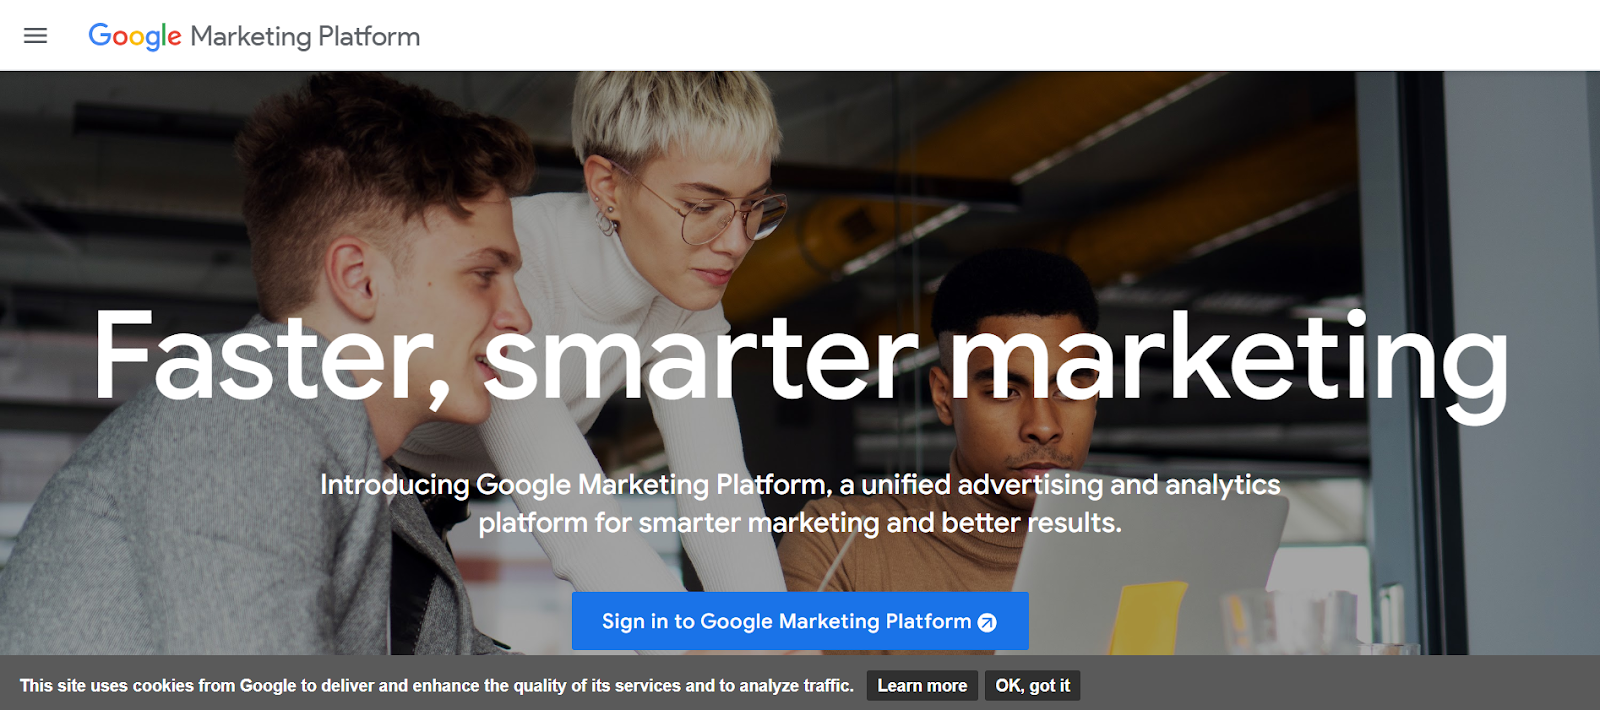 Image Credit: Google Marketing Platform - ppc lead generation 